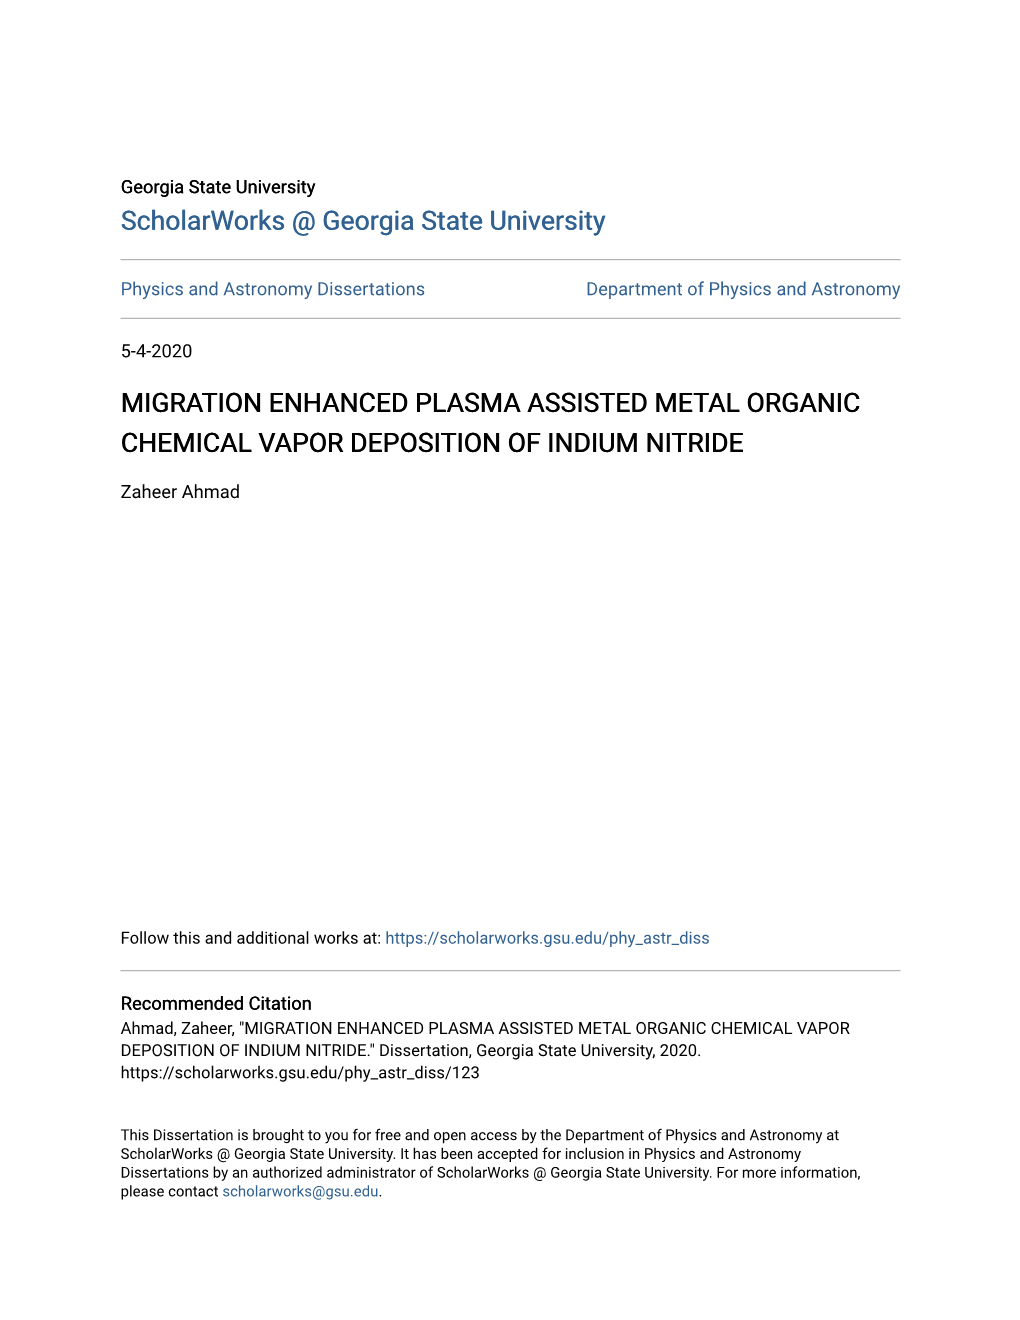 Migration Enhanced Plasma Assisted Metal Organic Chemical Vapor Deposition of Indium Nitride